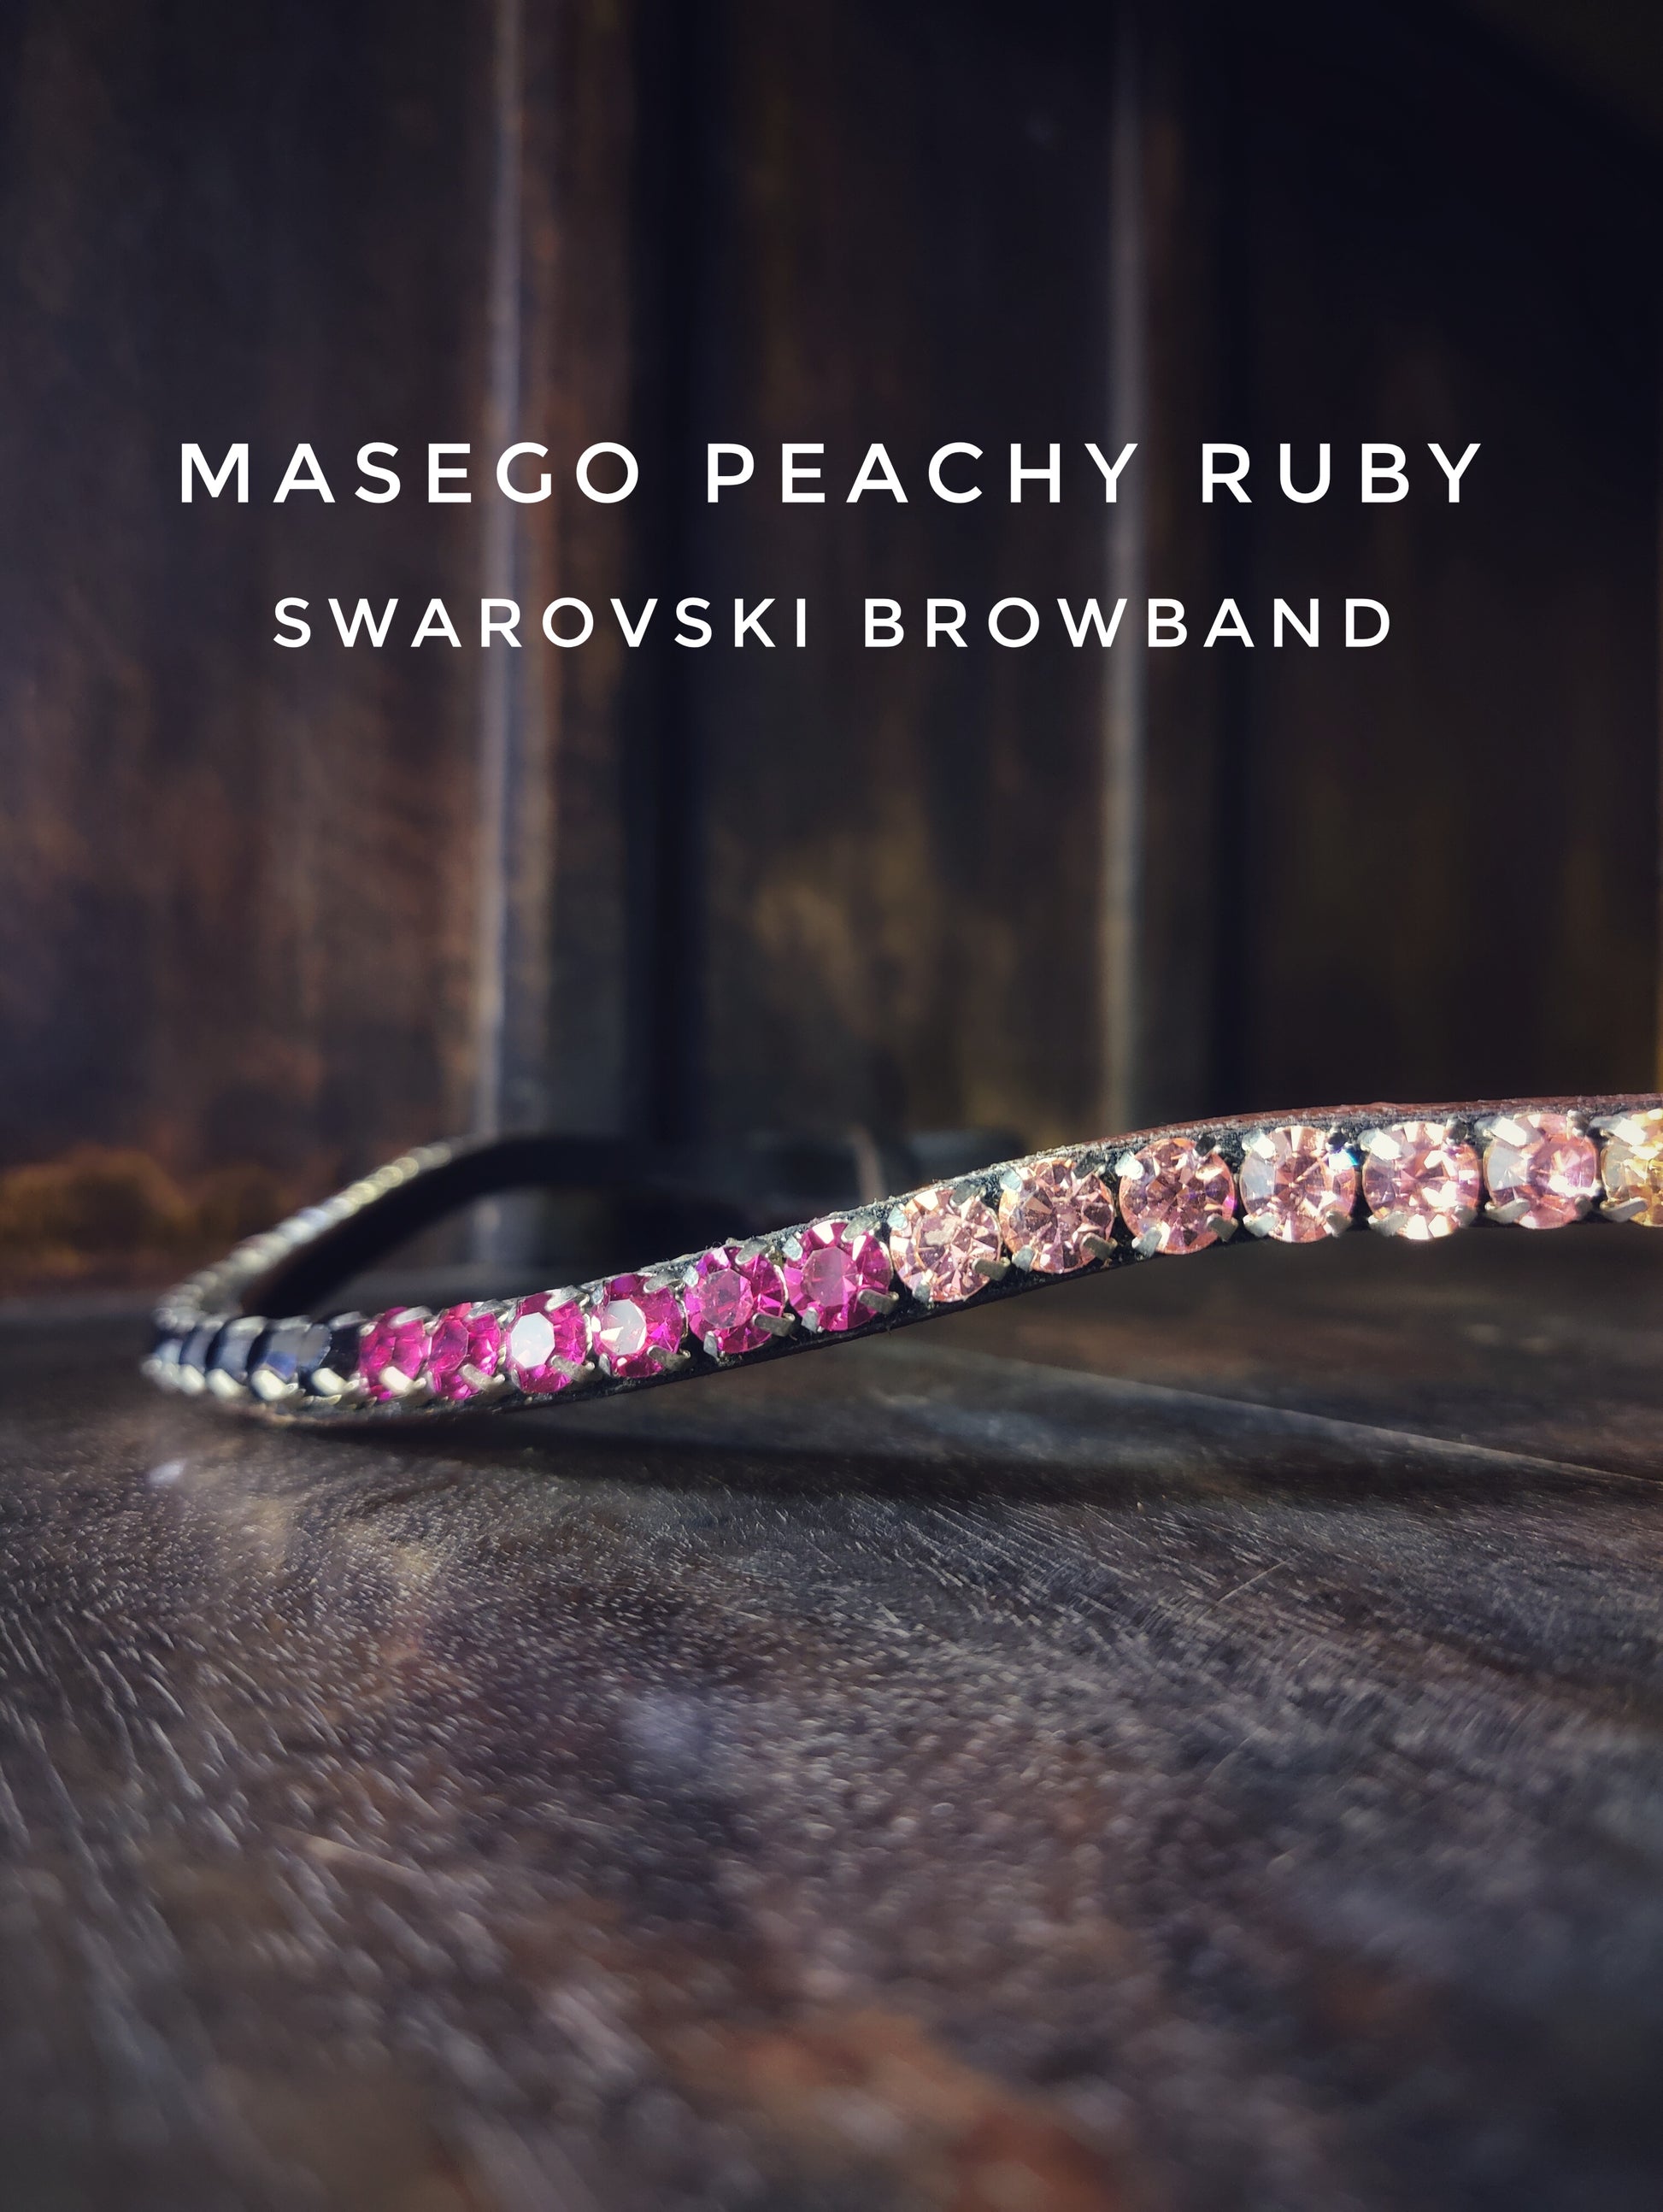 Masego Peachy Ruby browband - MASEGO horsewear